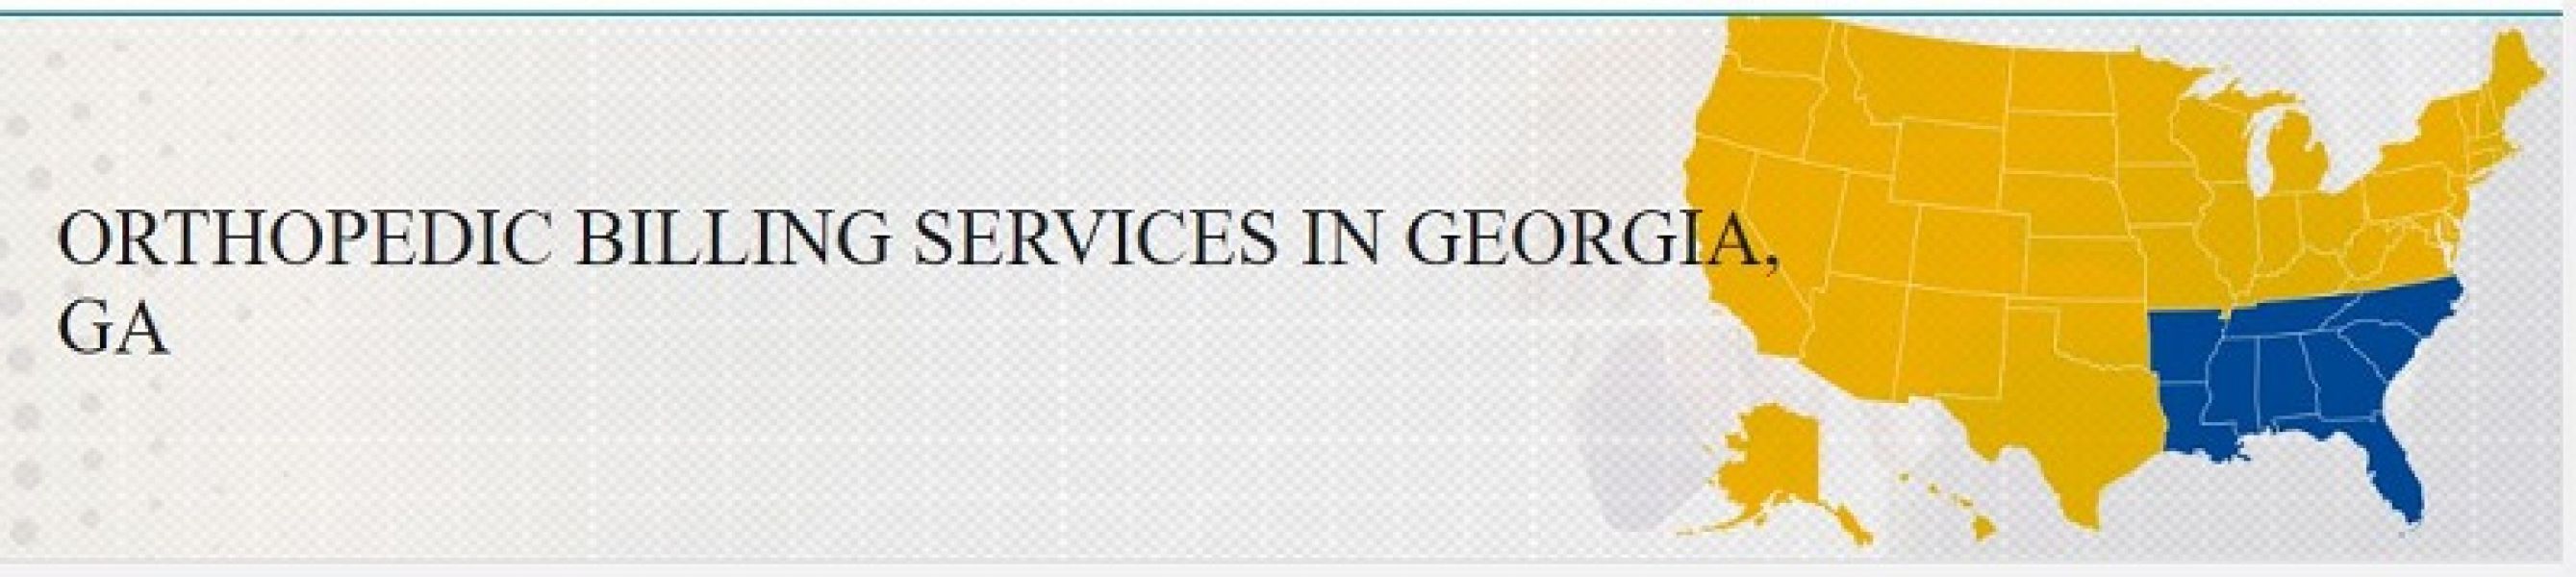 Orthopedic Billing Services for Georgia, GA